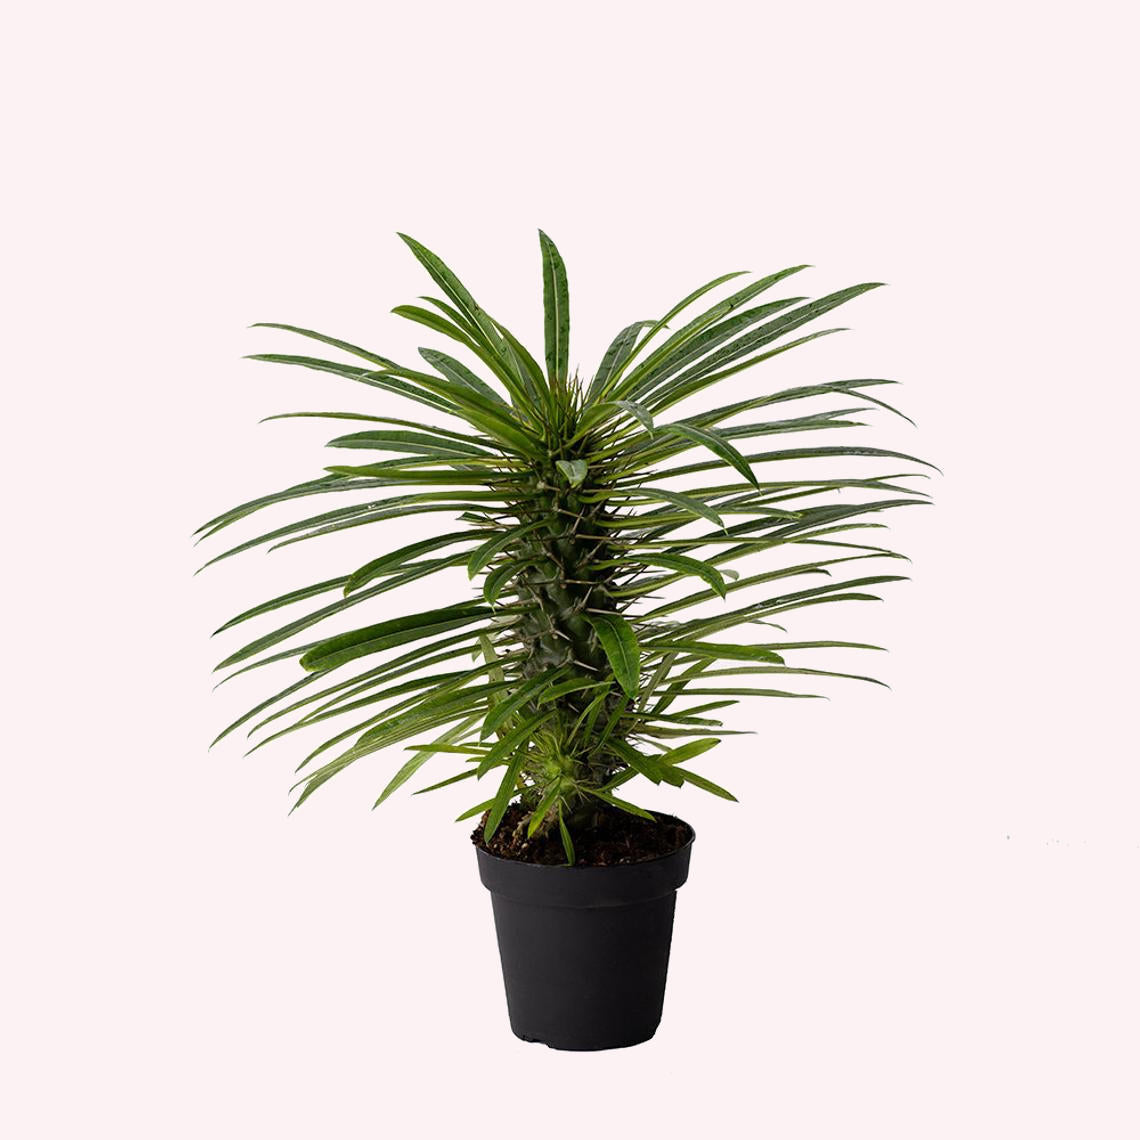 Madagascar Palm in a 4" pot.